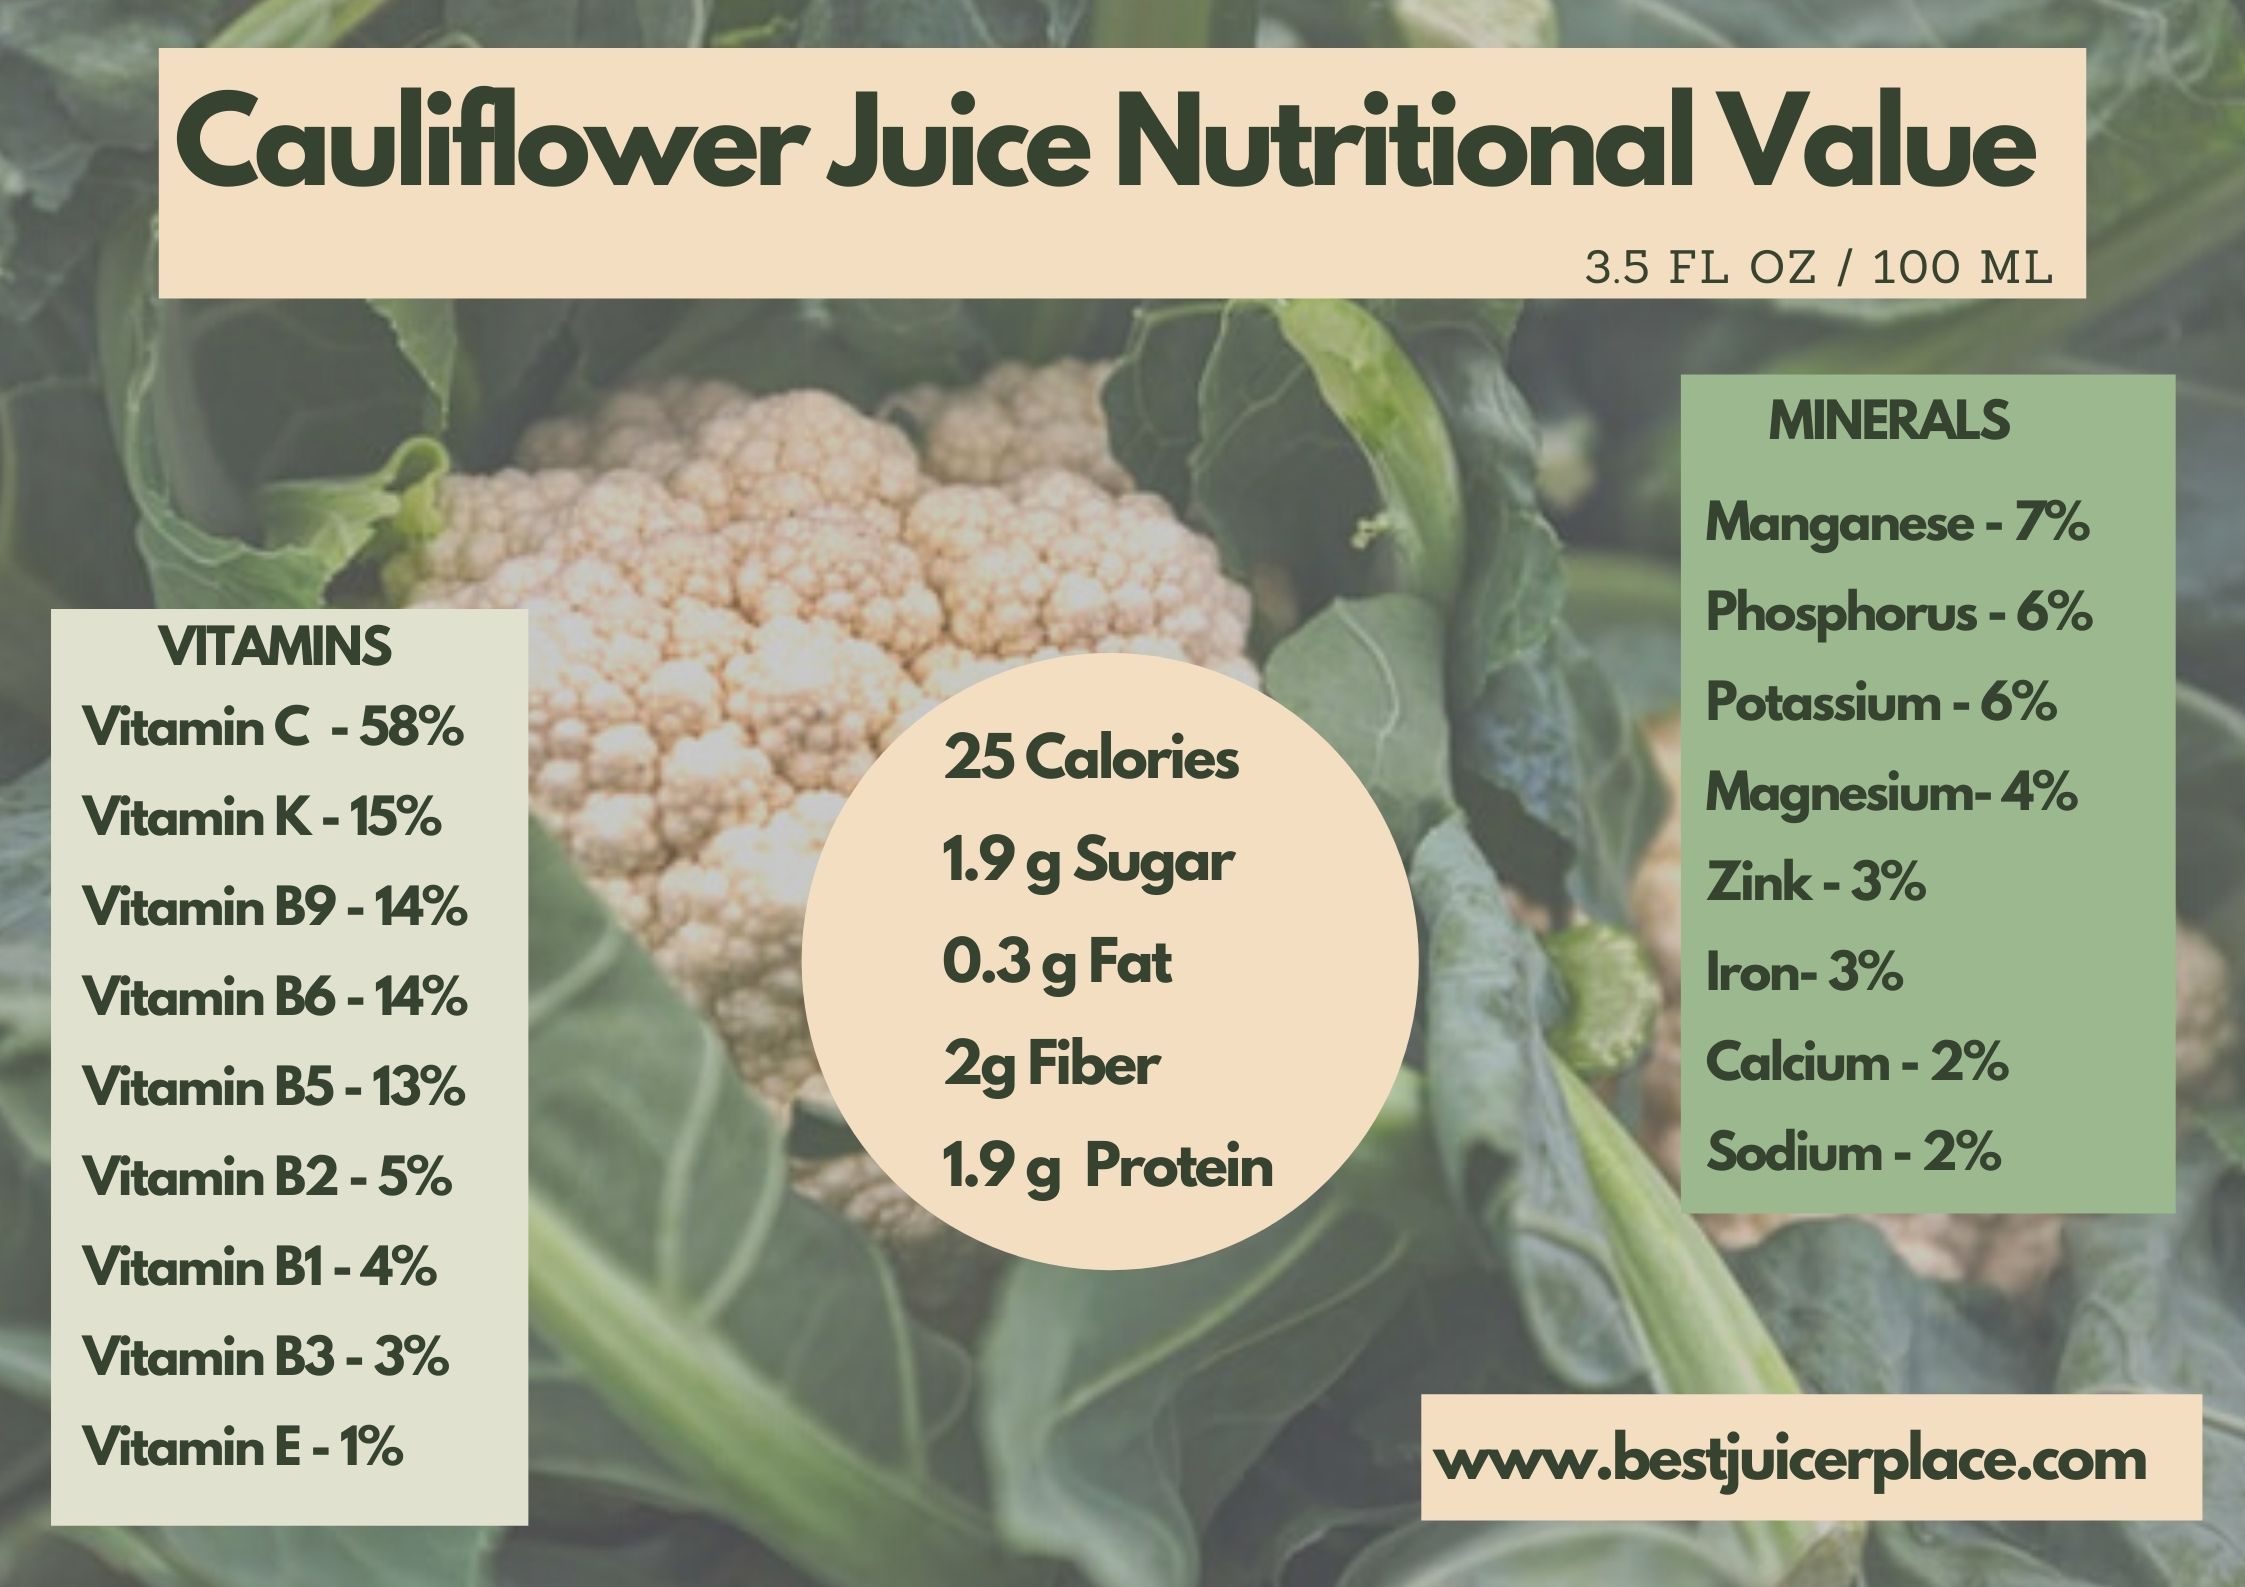 Cauliflower juice nutritional value